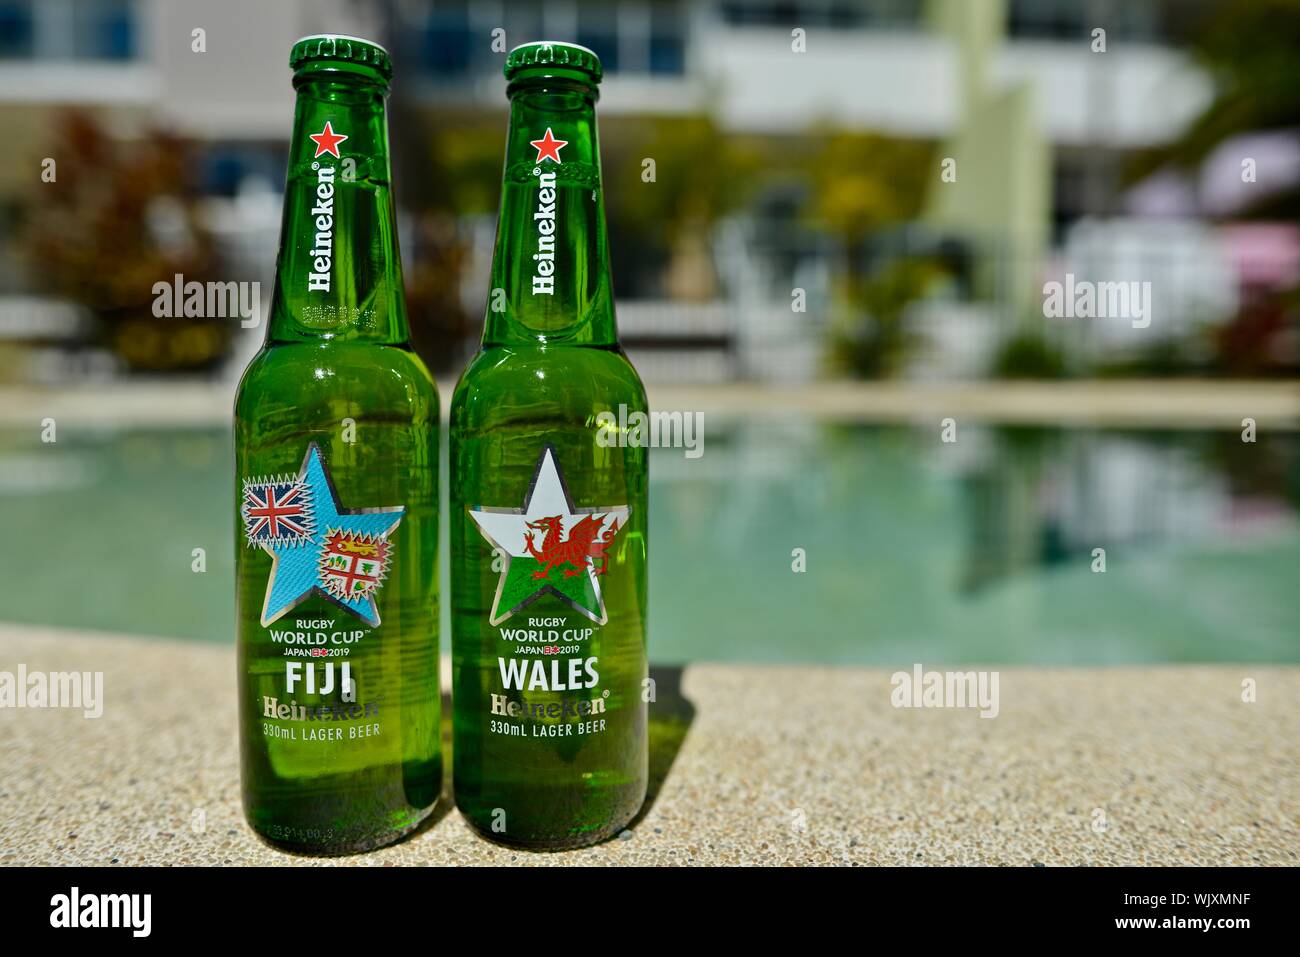 Wales versus Fiji, Heineken 2019 Japan Rugby world cup beer bottles Stock Photo